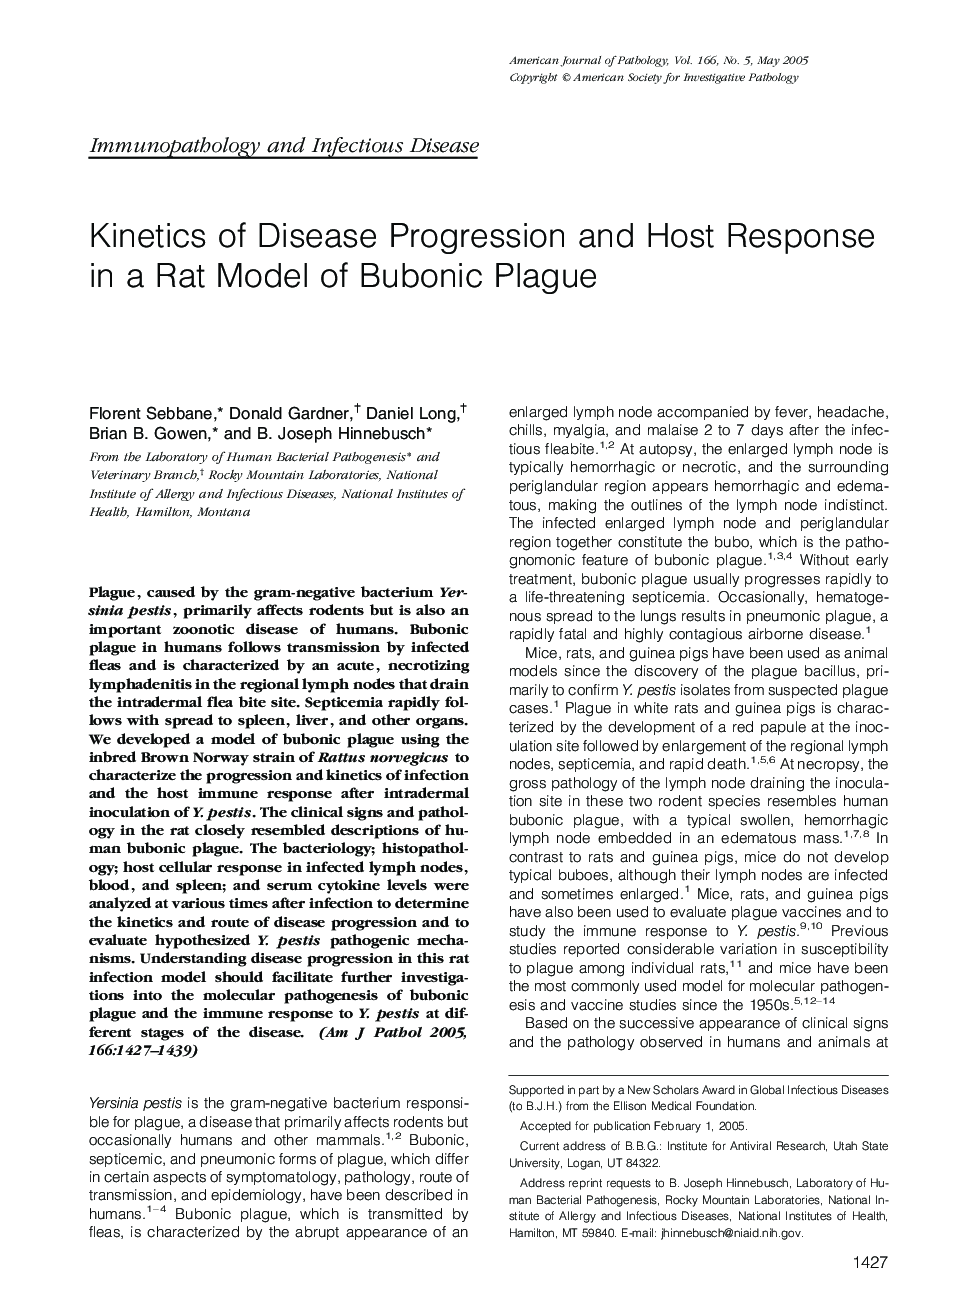 Kinetics of Disease Progression and Host Response in a Rat Model of Bubonic Plague